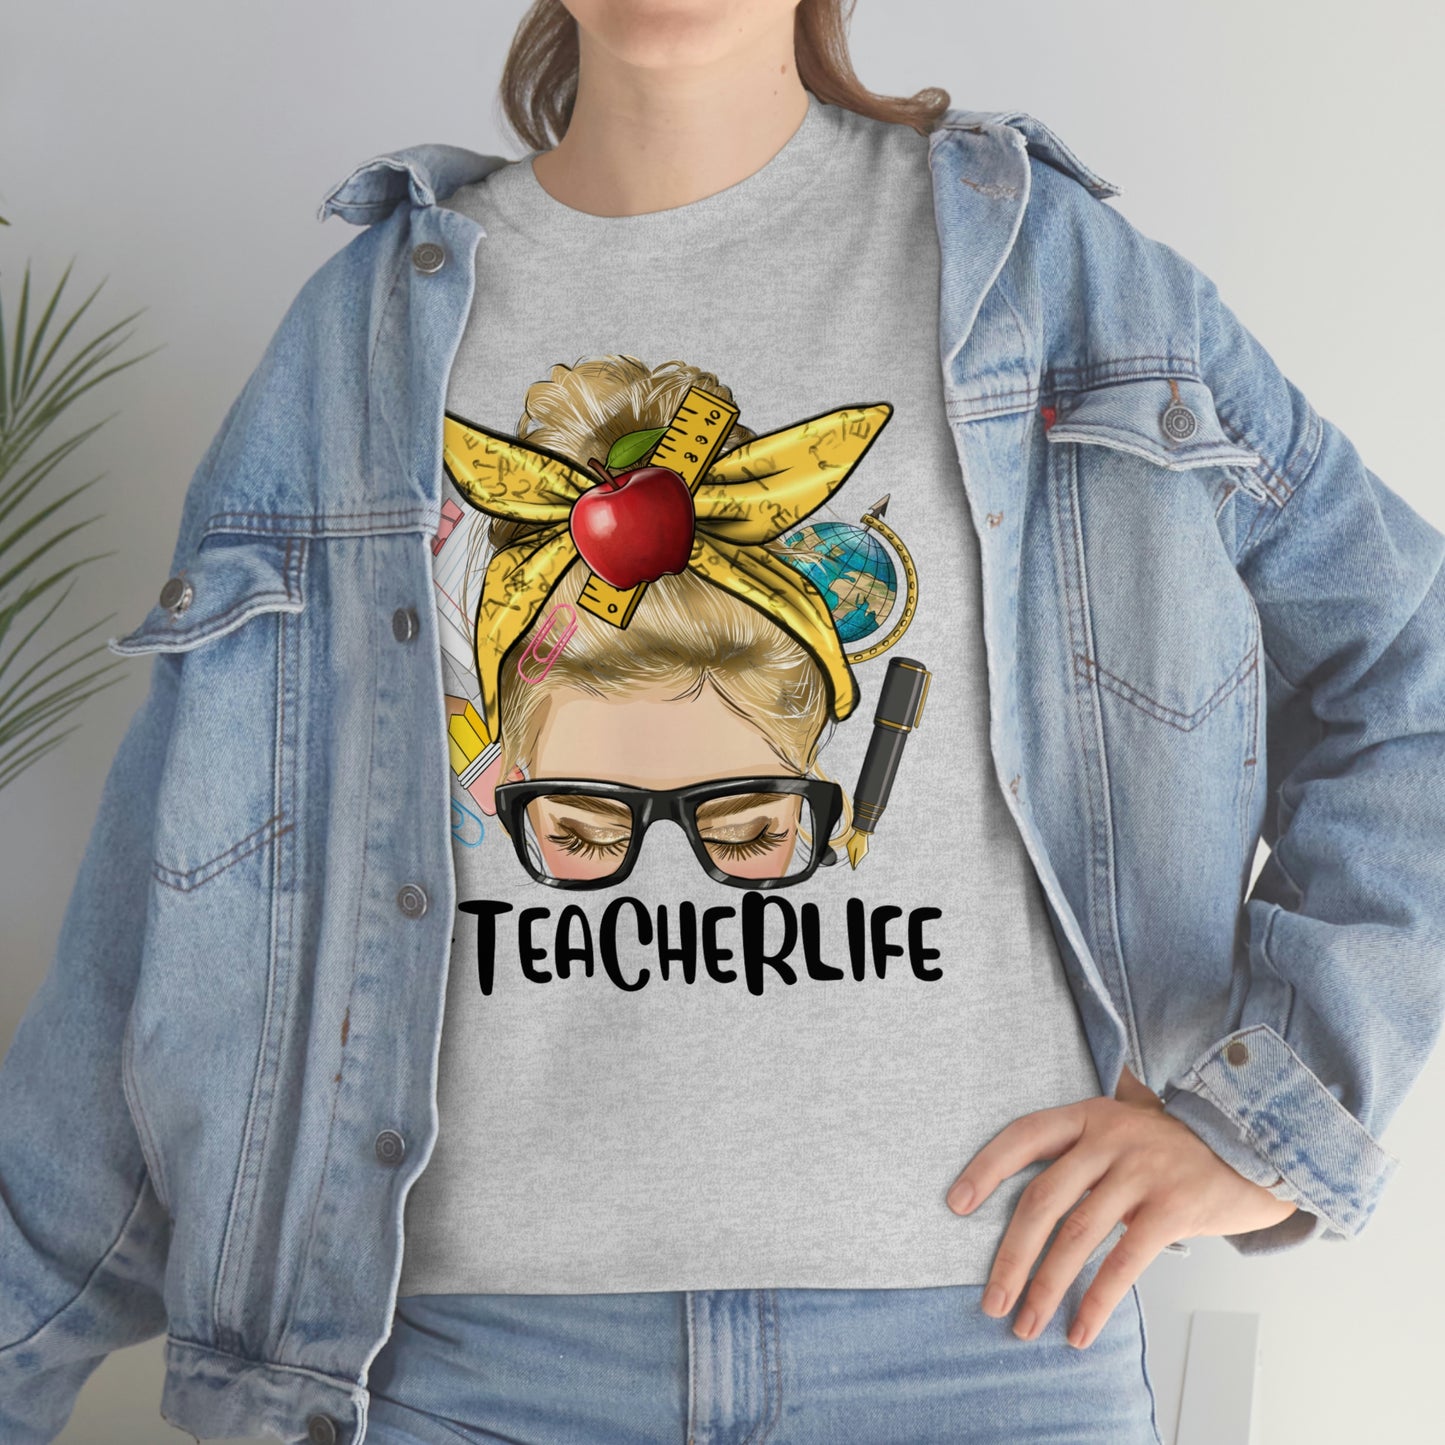 Educator Apparel (Teacher Life Tee)